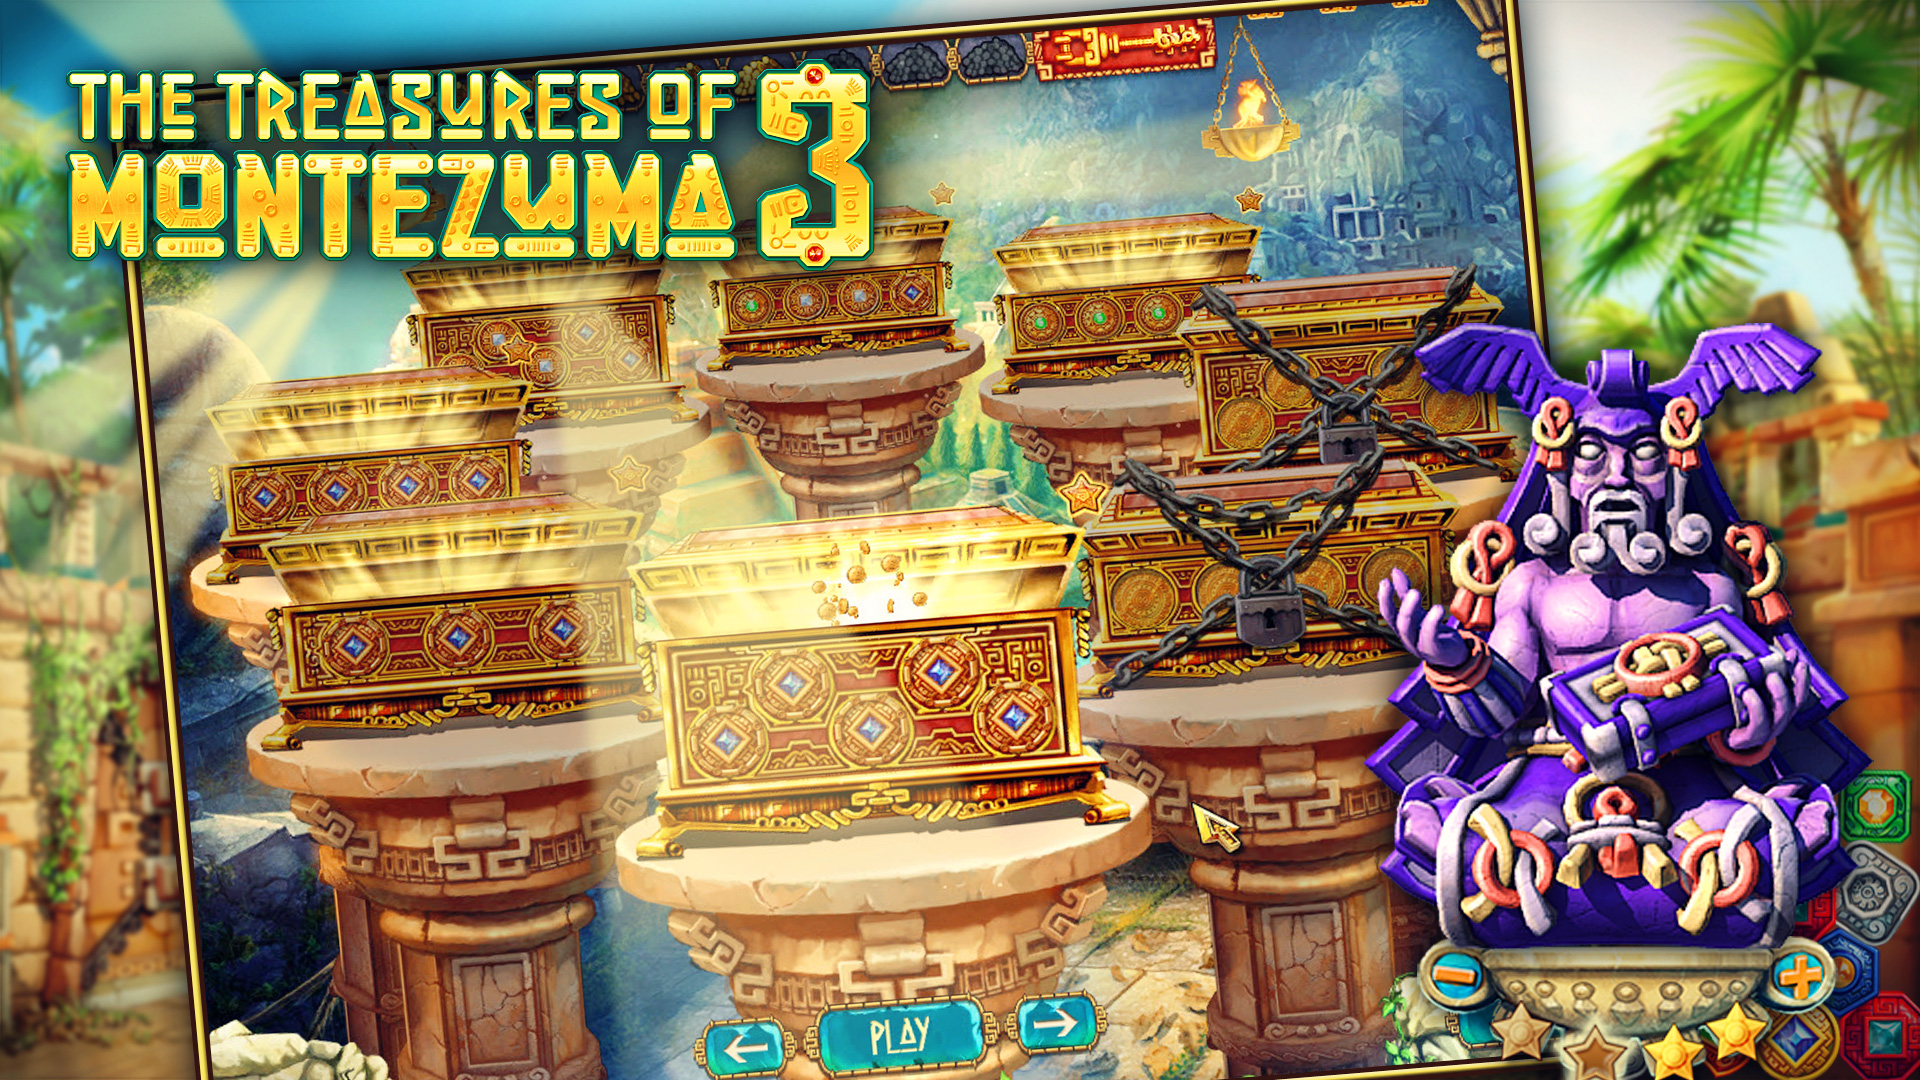 The Treasures of Montezuma 3 download the new